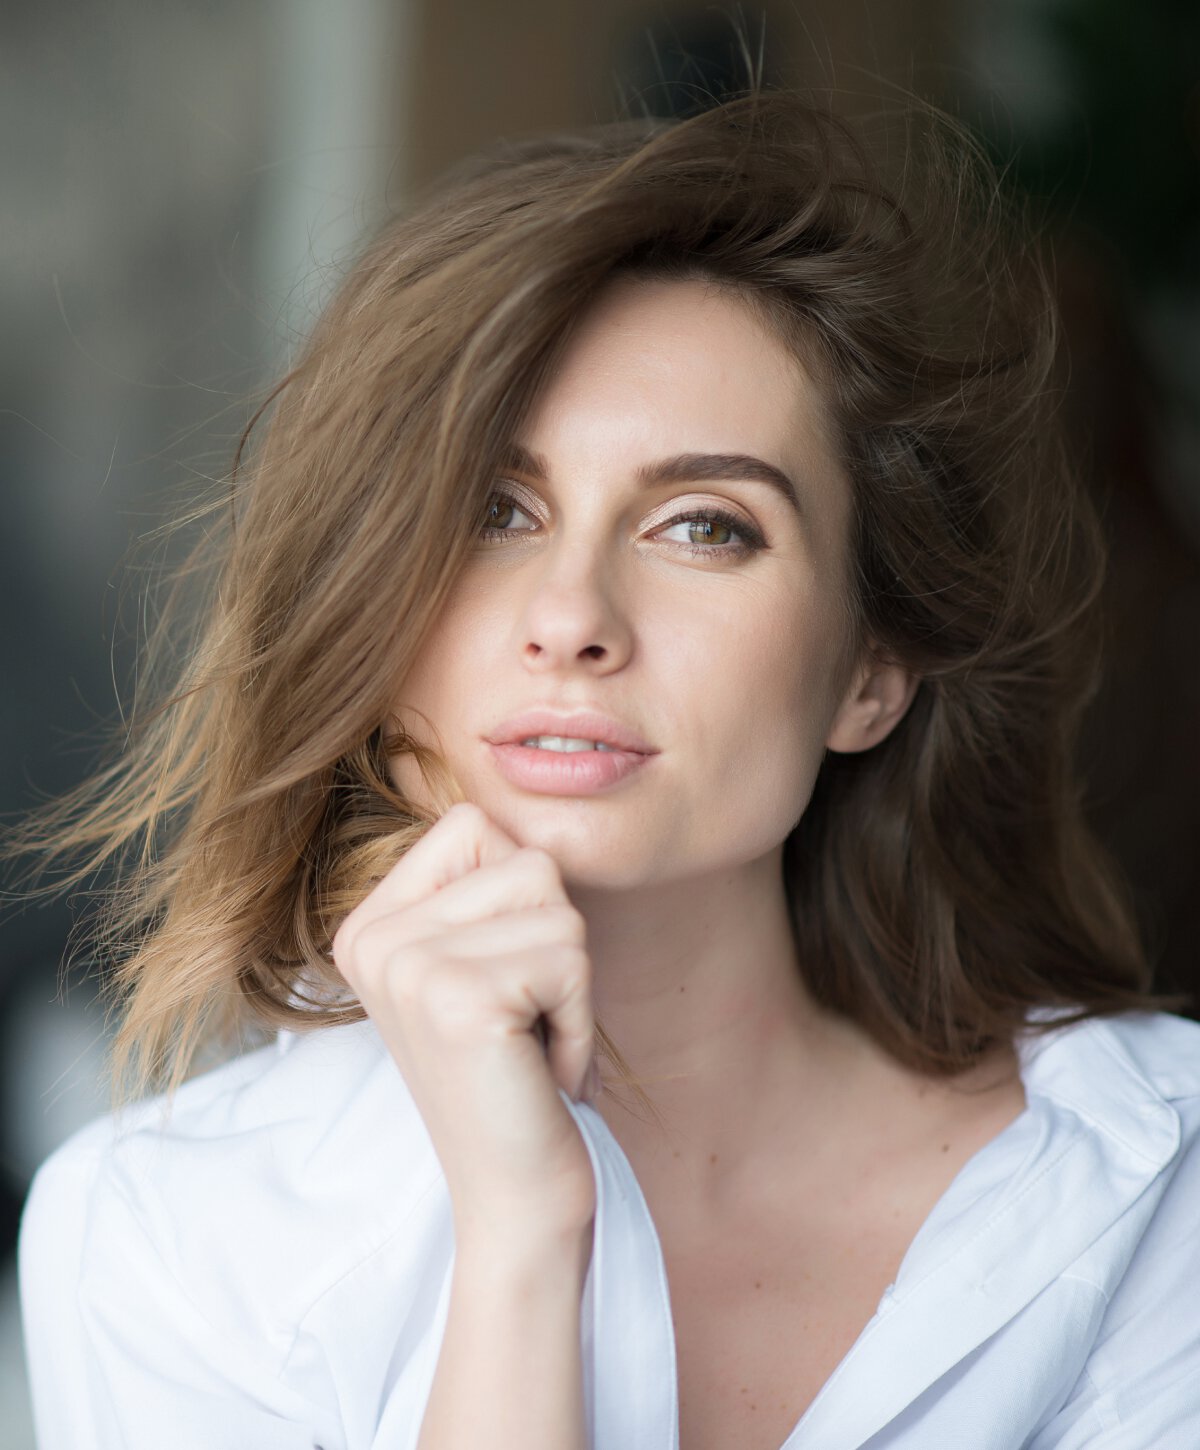 Murrieta Medspa model with brown eyes